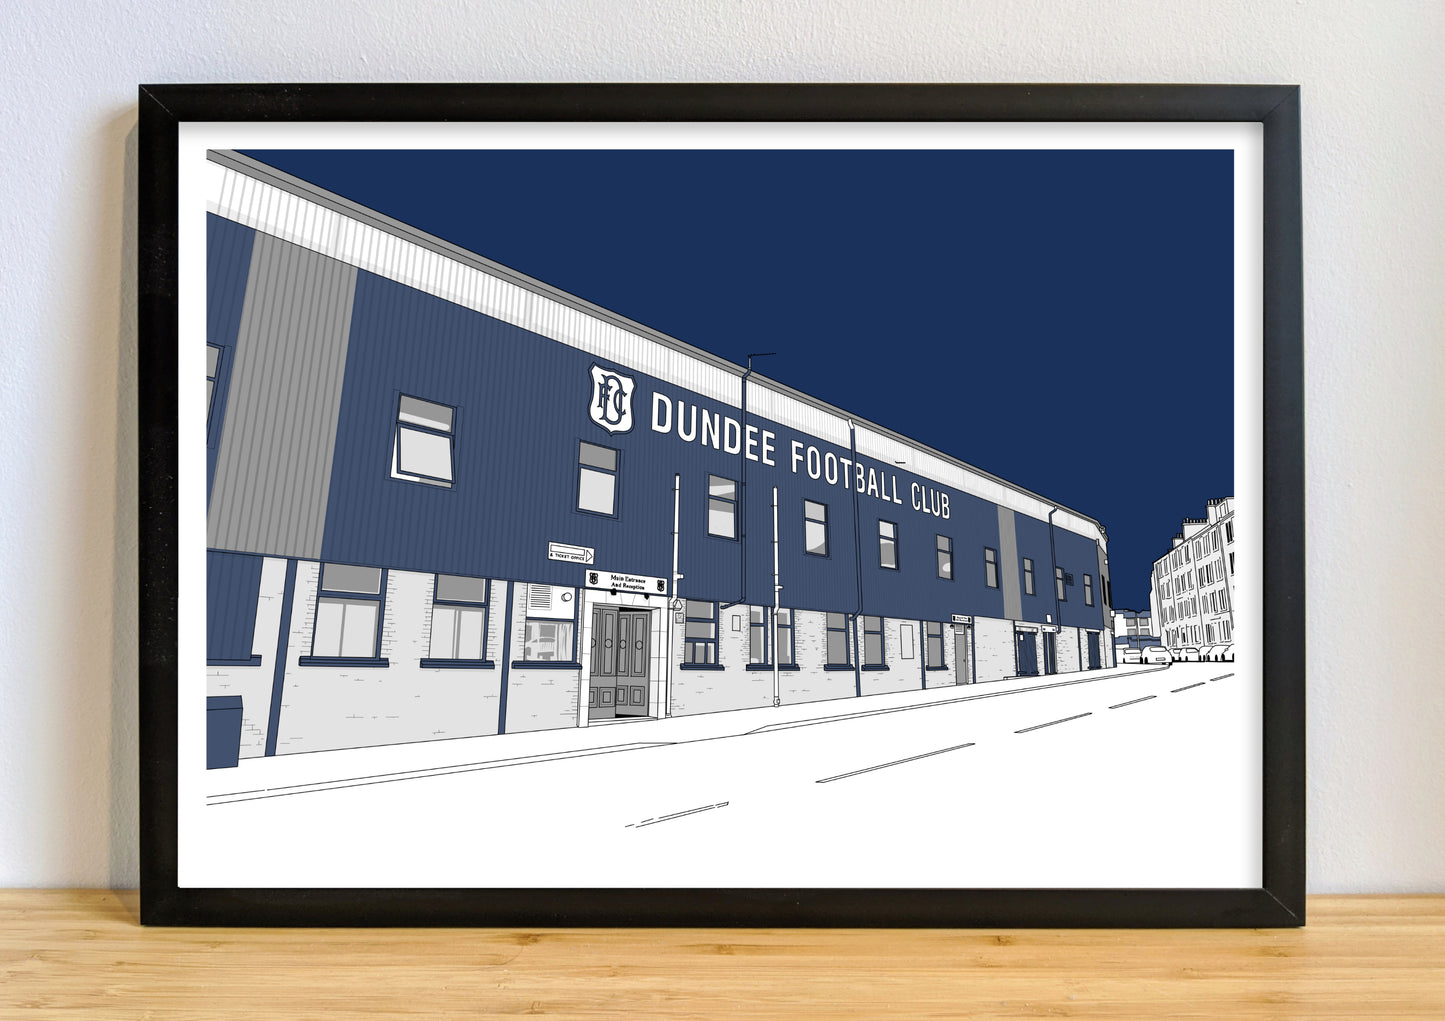 Dundee FC Art Print of Dens Park Kilmac Stadium